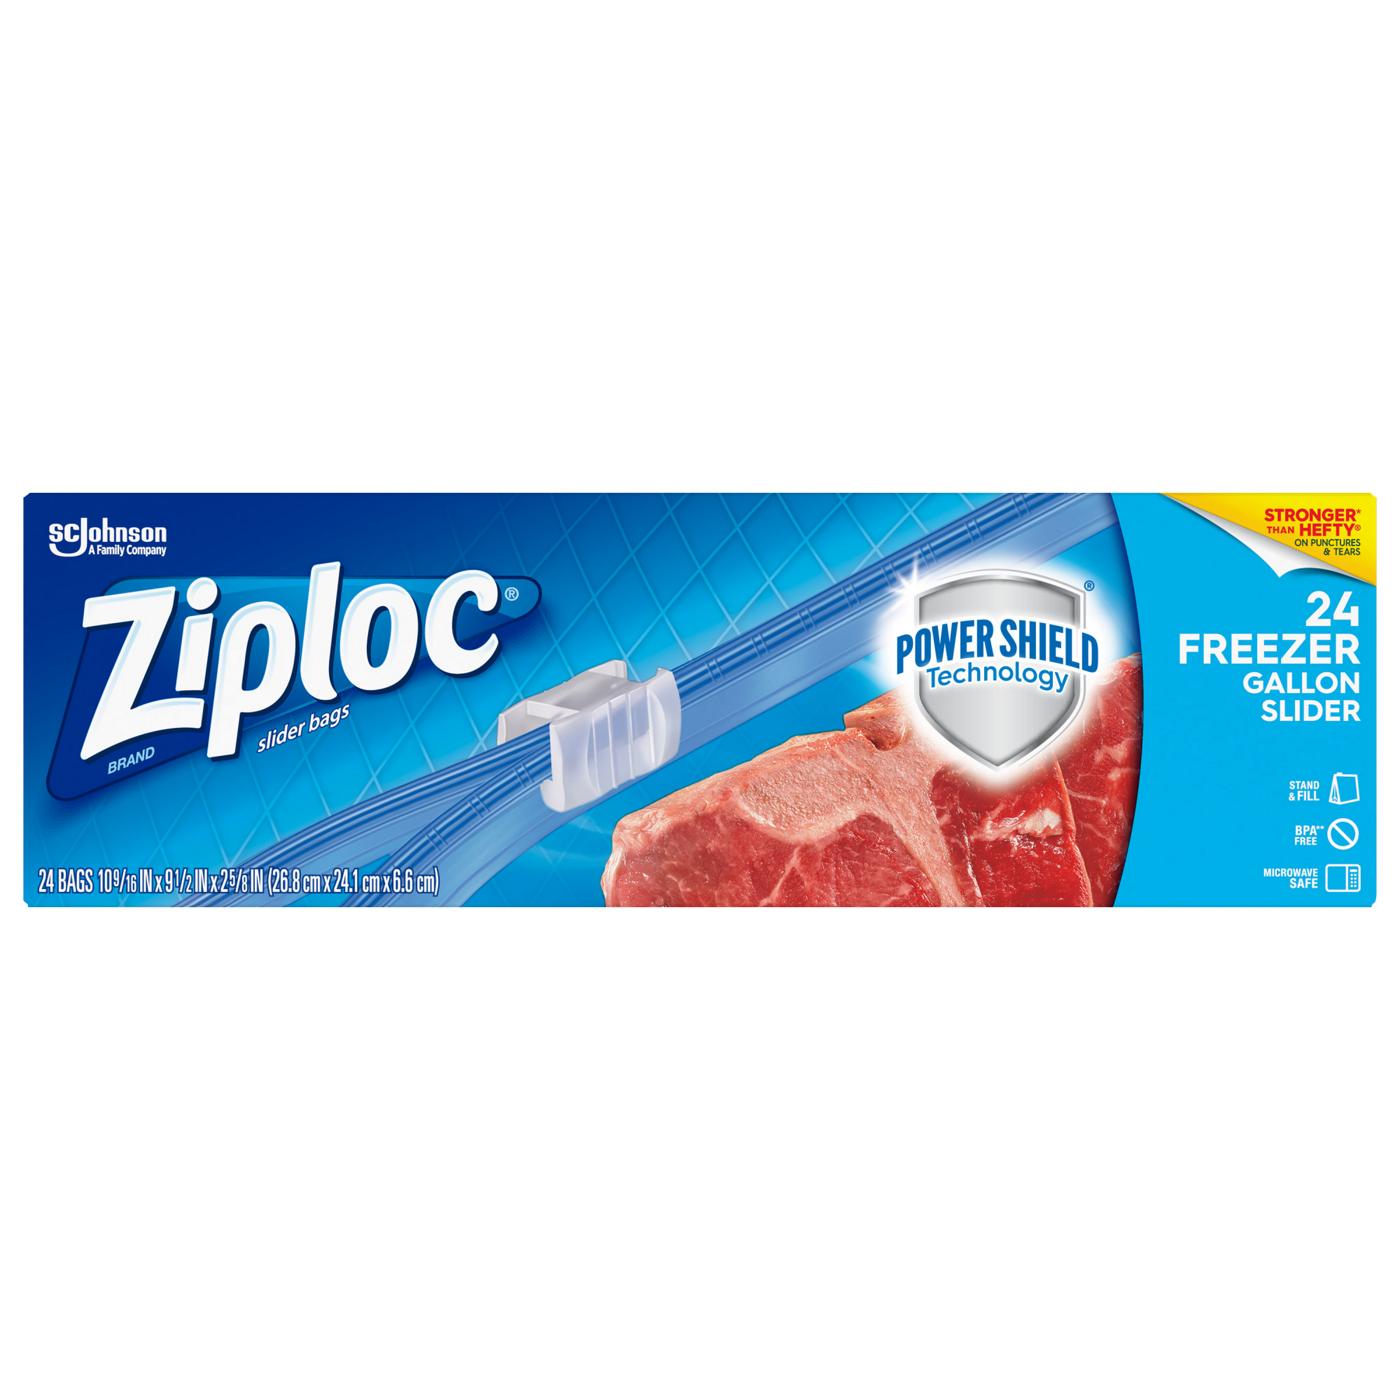 Ziploc Slider Gallon Freezer Bags - Shop Storage Bags at H-E-B